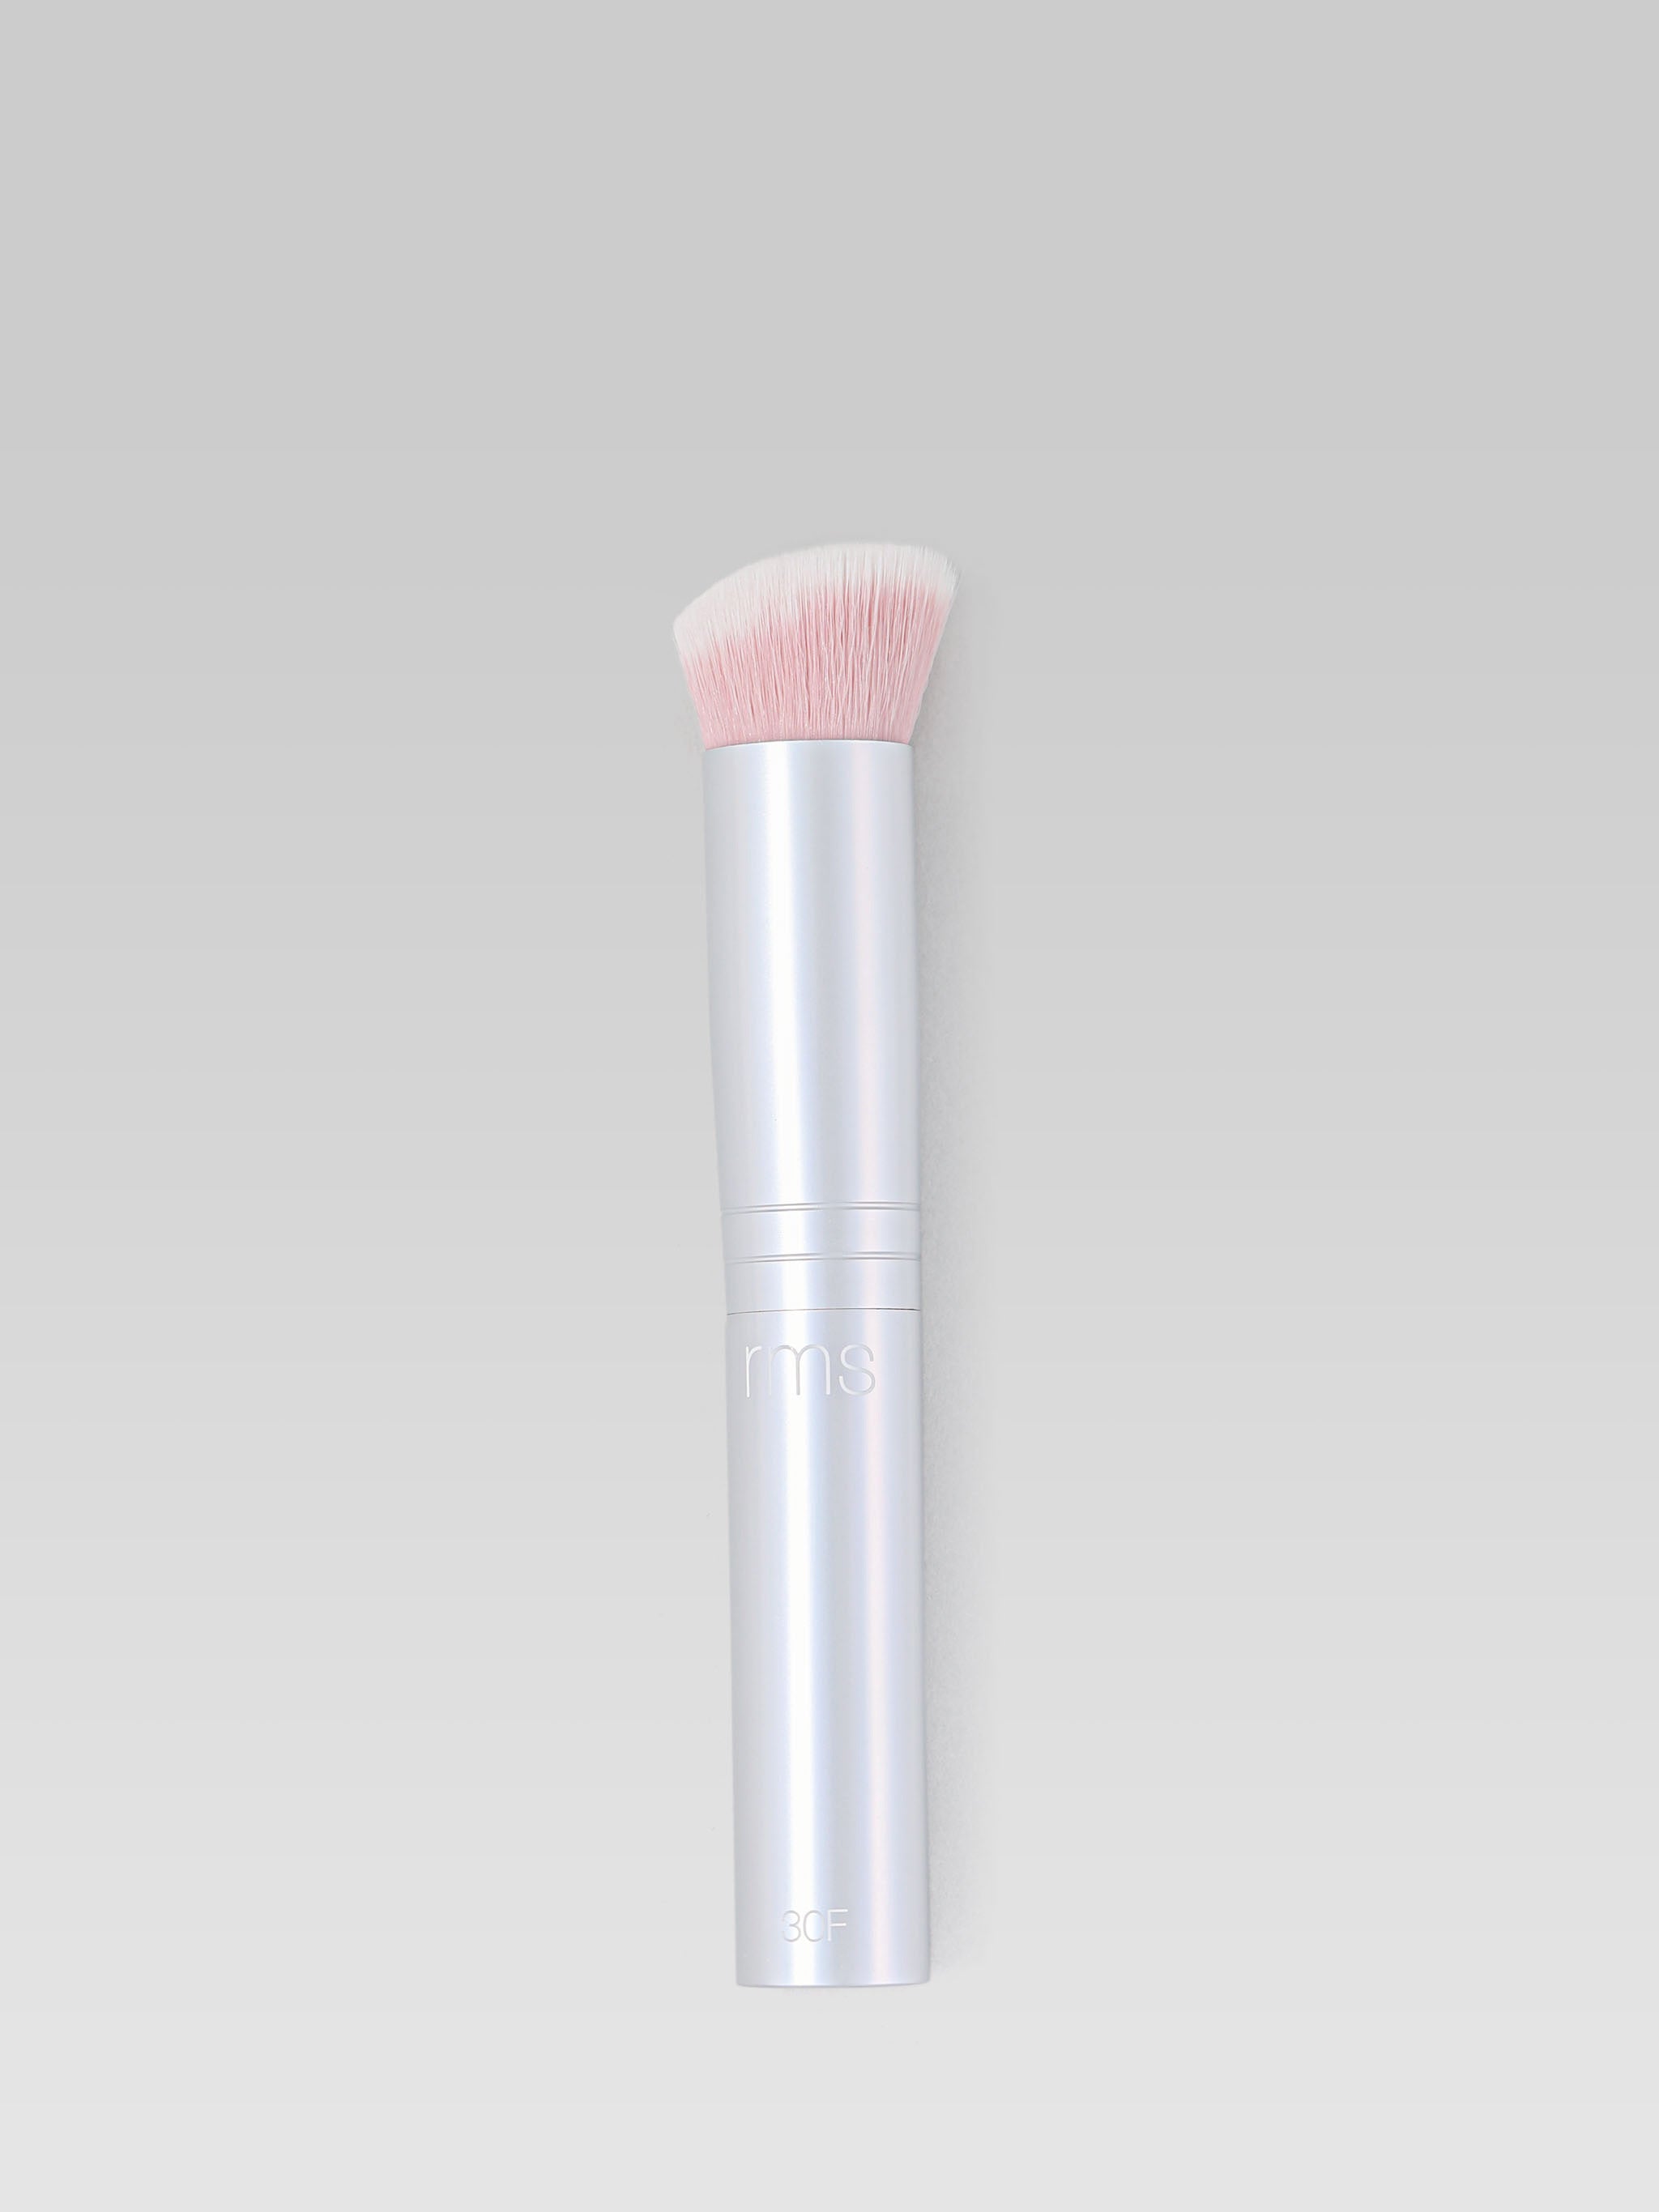 RMS Beauty Foundation Brush product shot